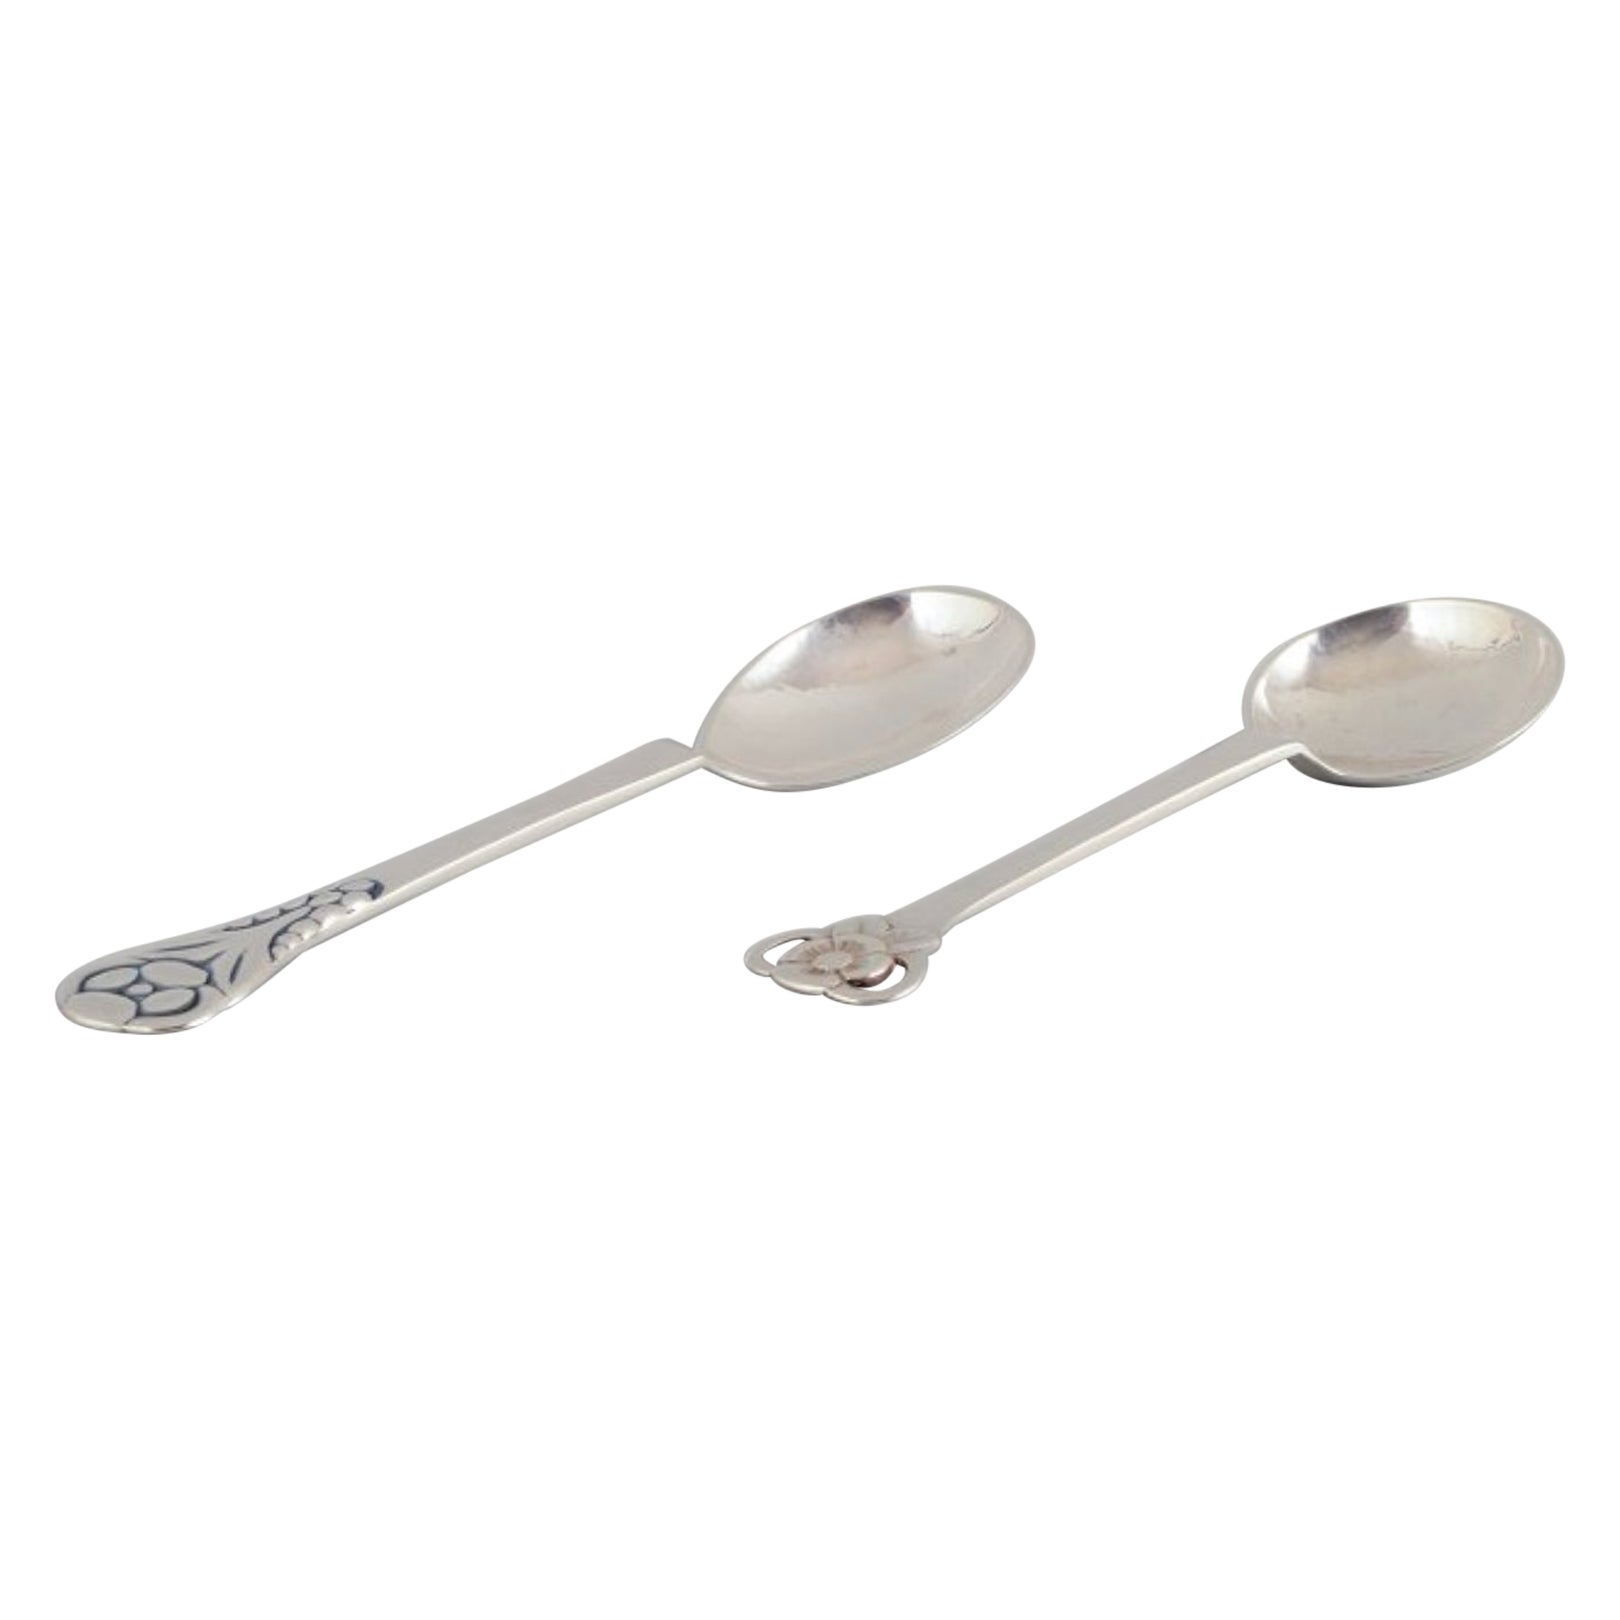 Evald Nielsen, Danish Silversmith. Two Beautiful Large Art Nouveau Sugar Spoons